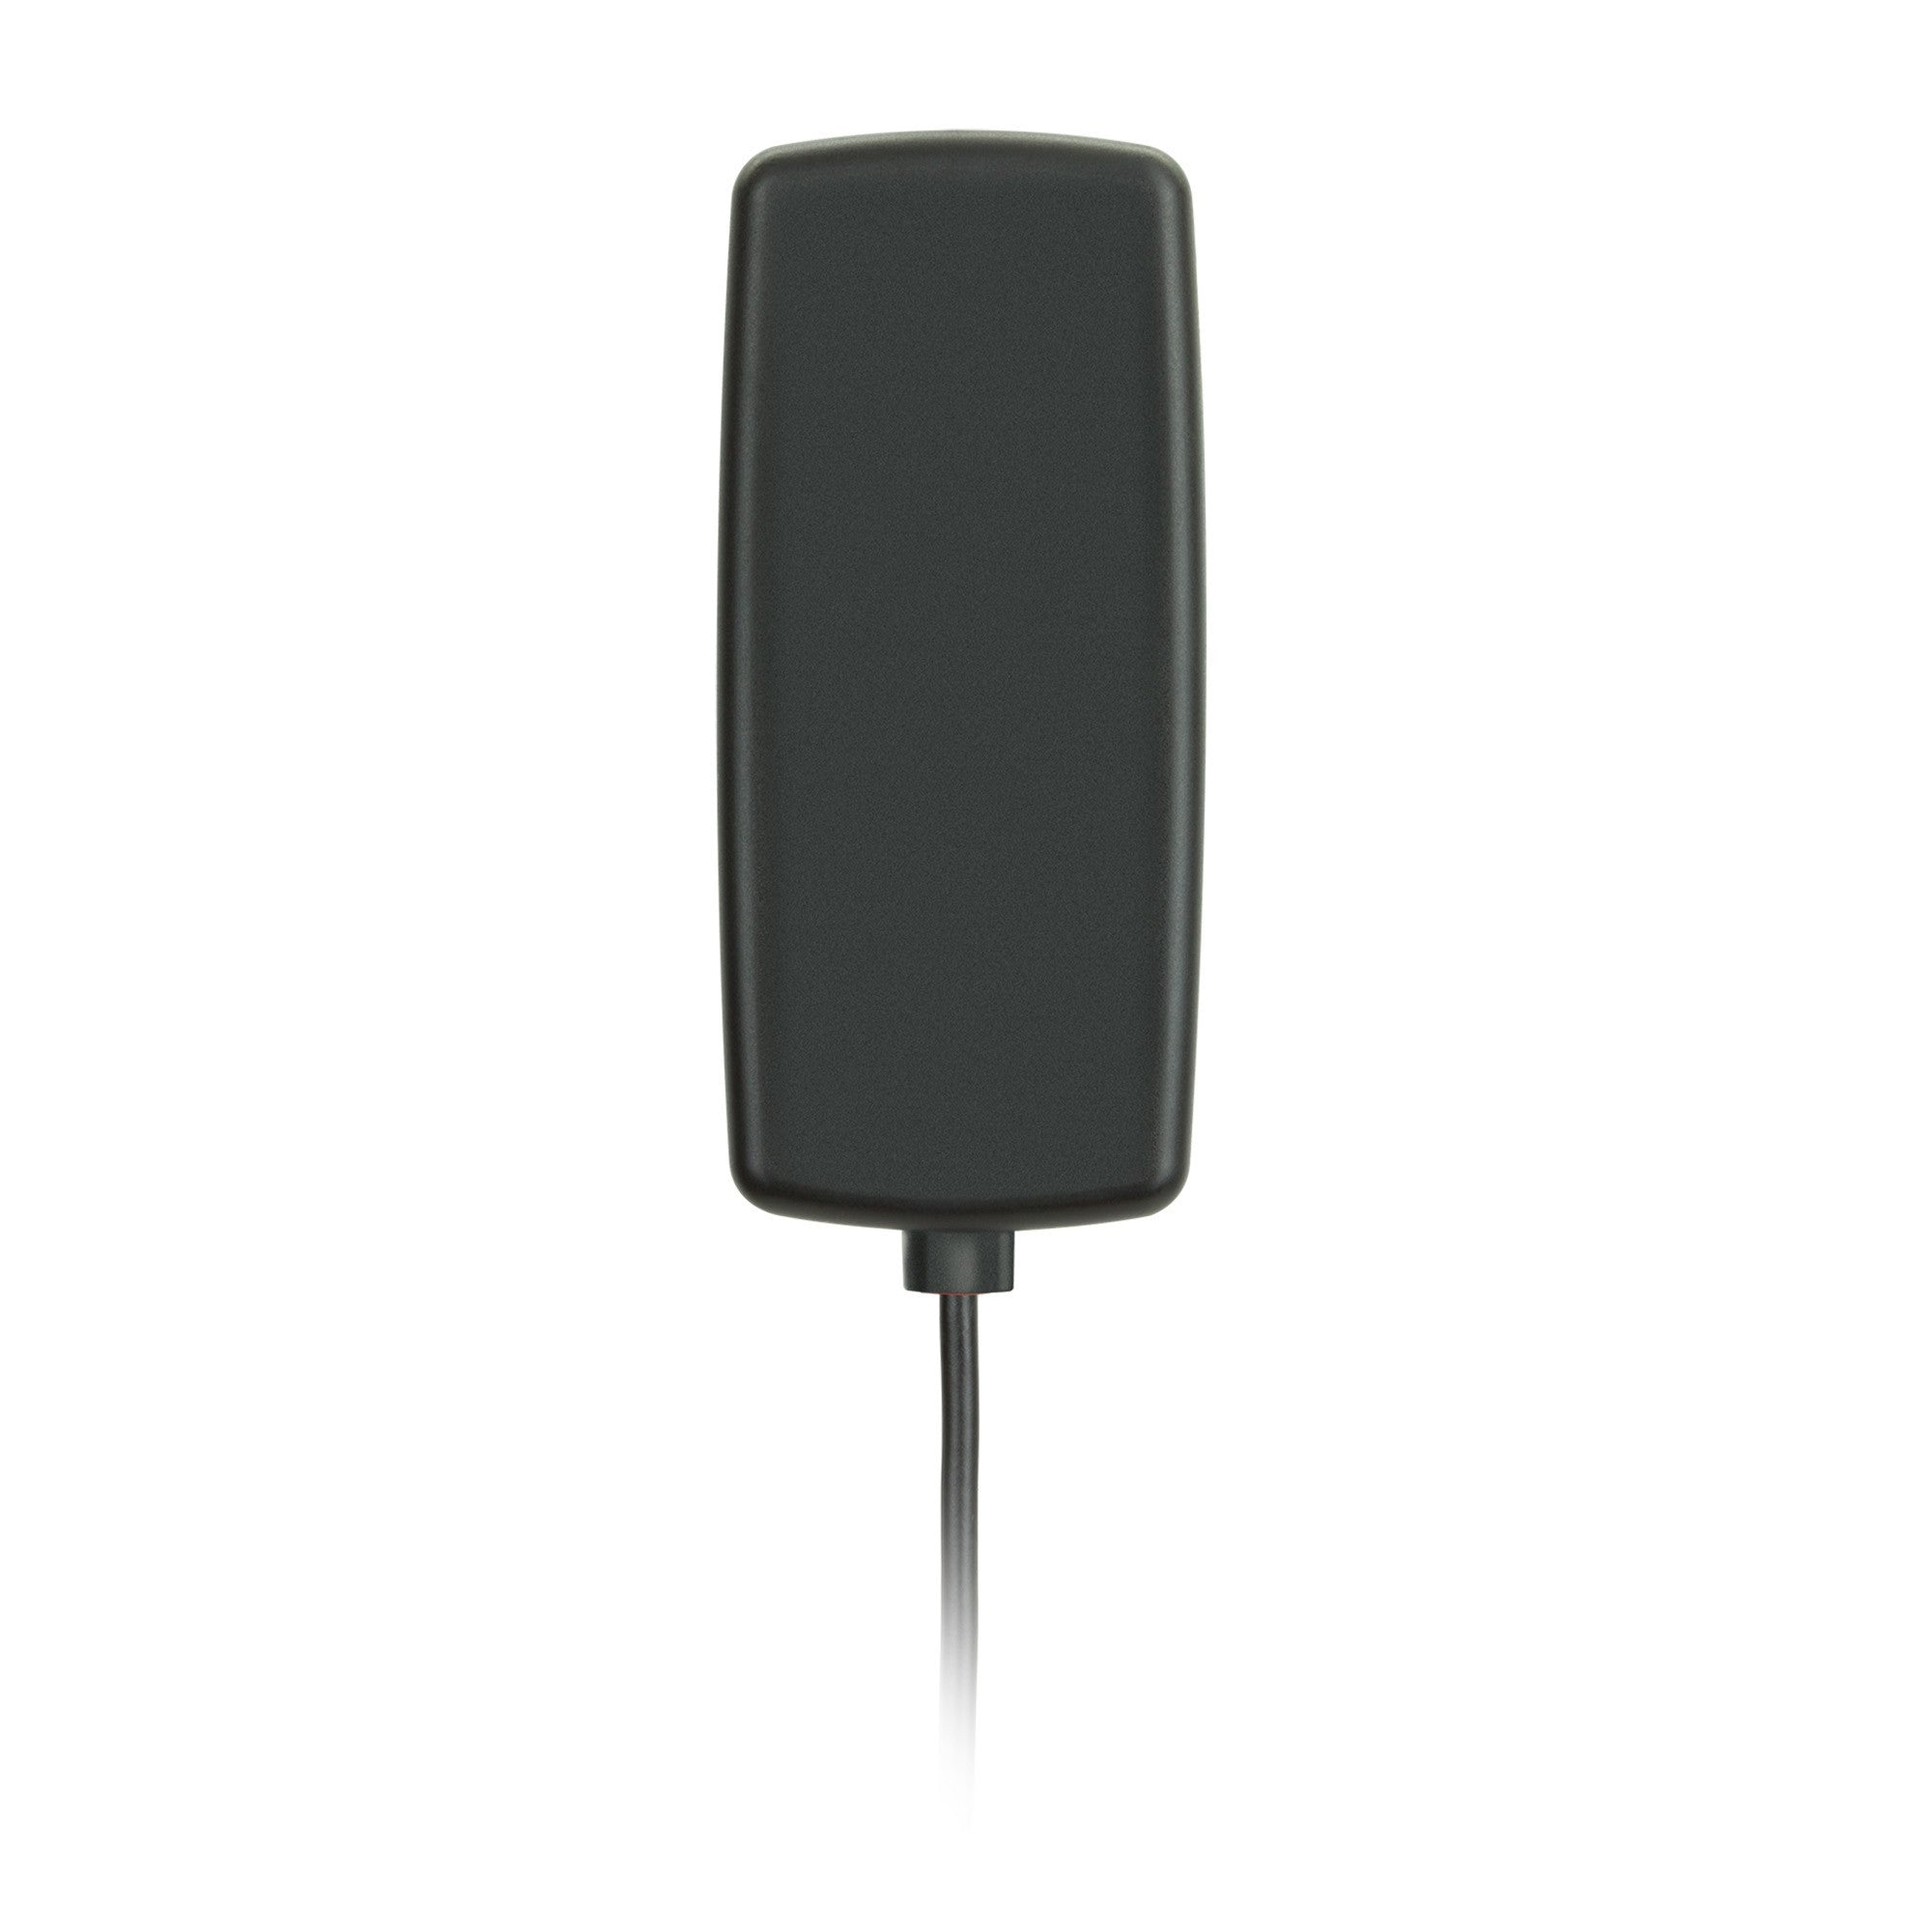 WeBoost 4G Slim Low-Profile Antenna